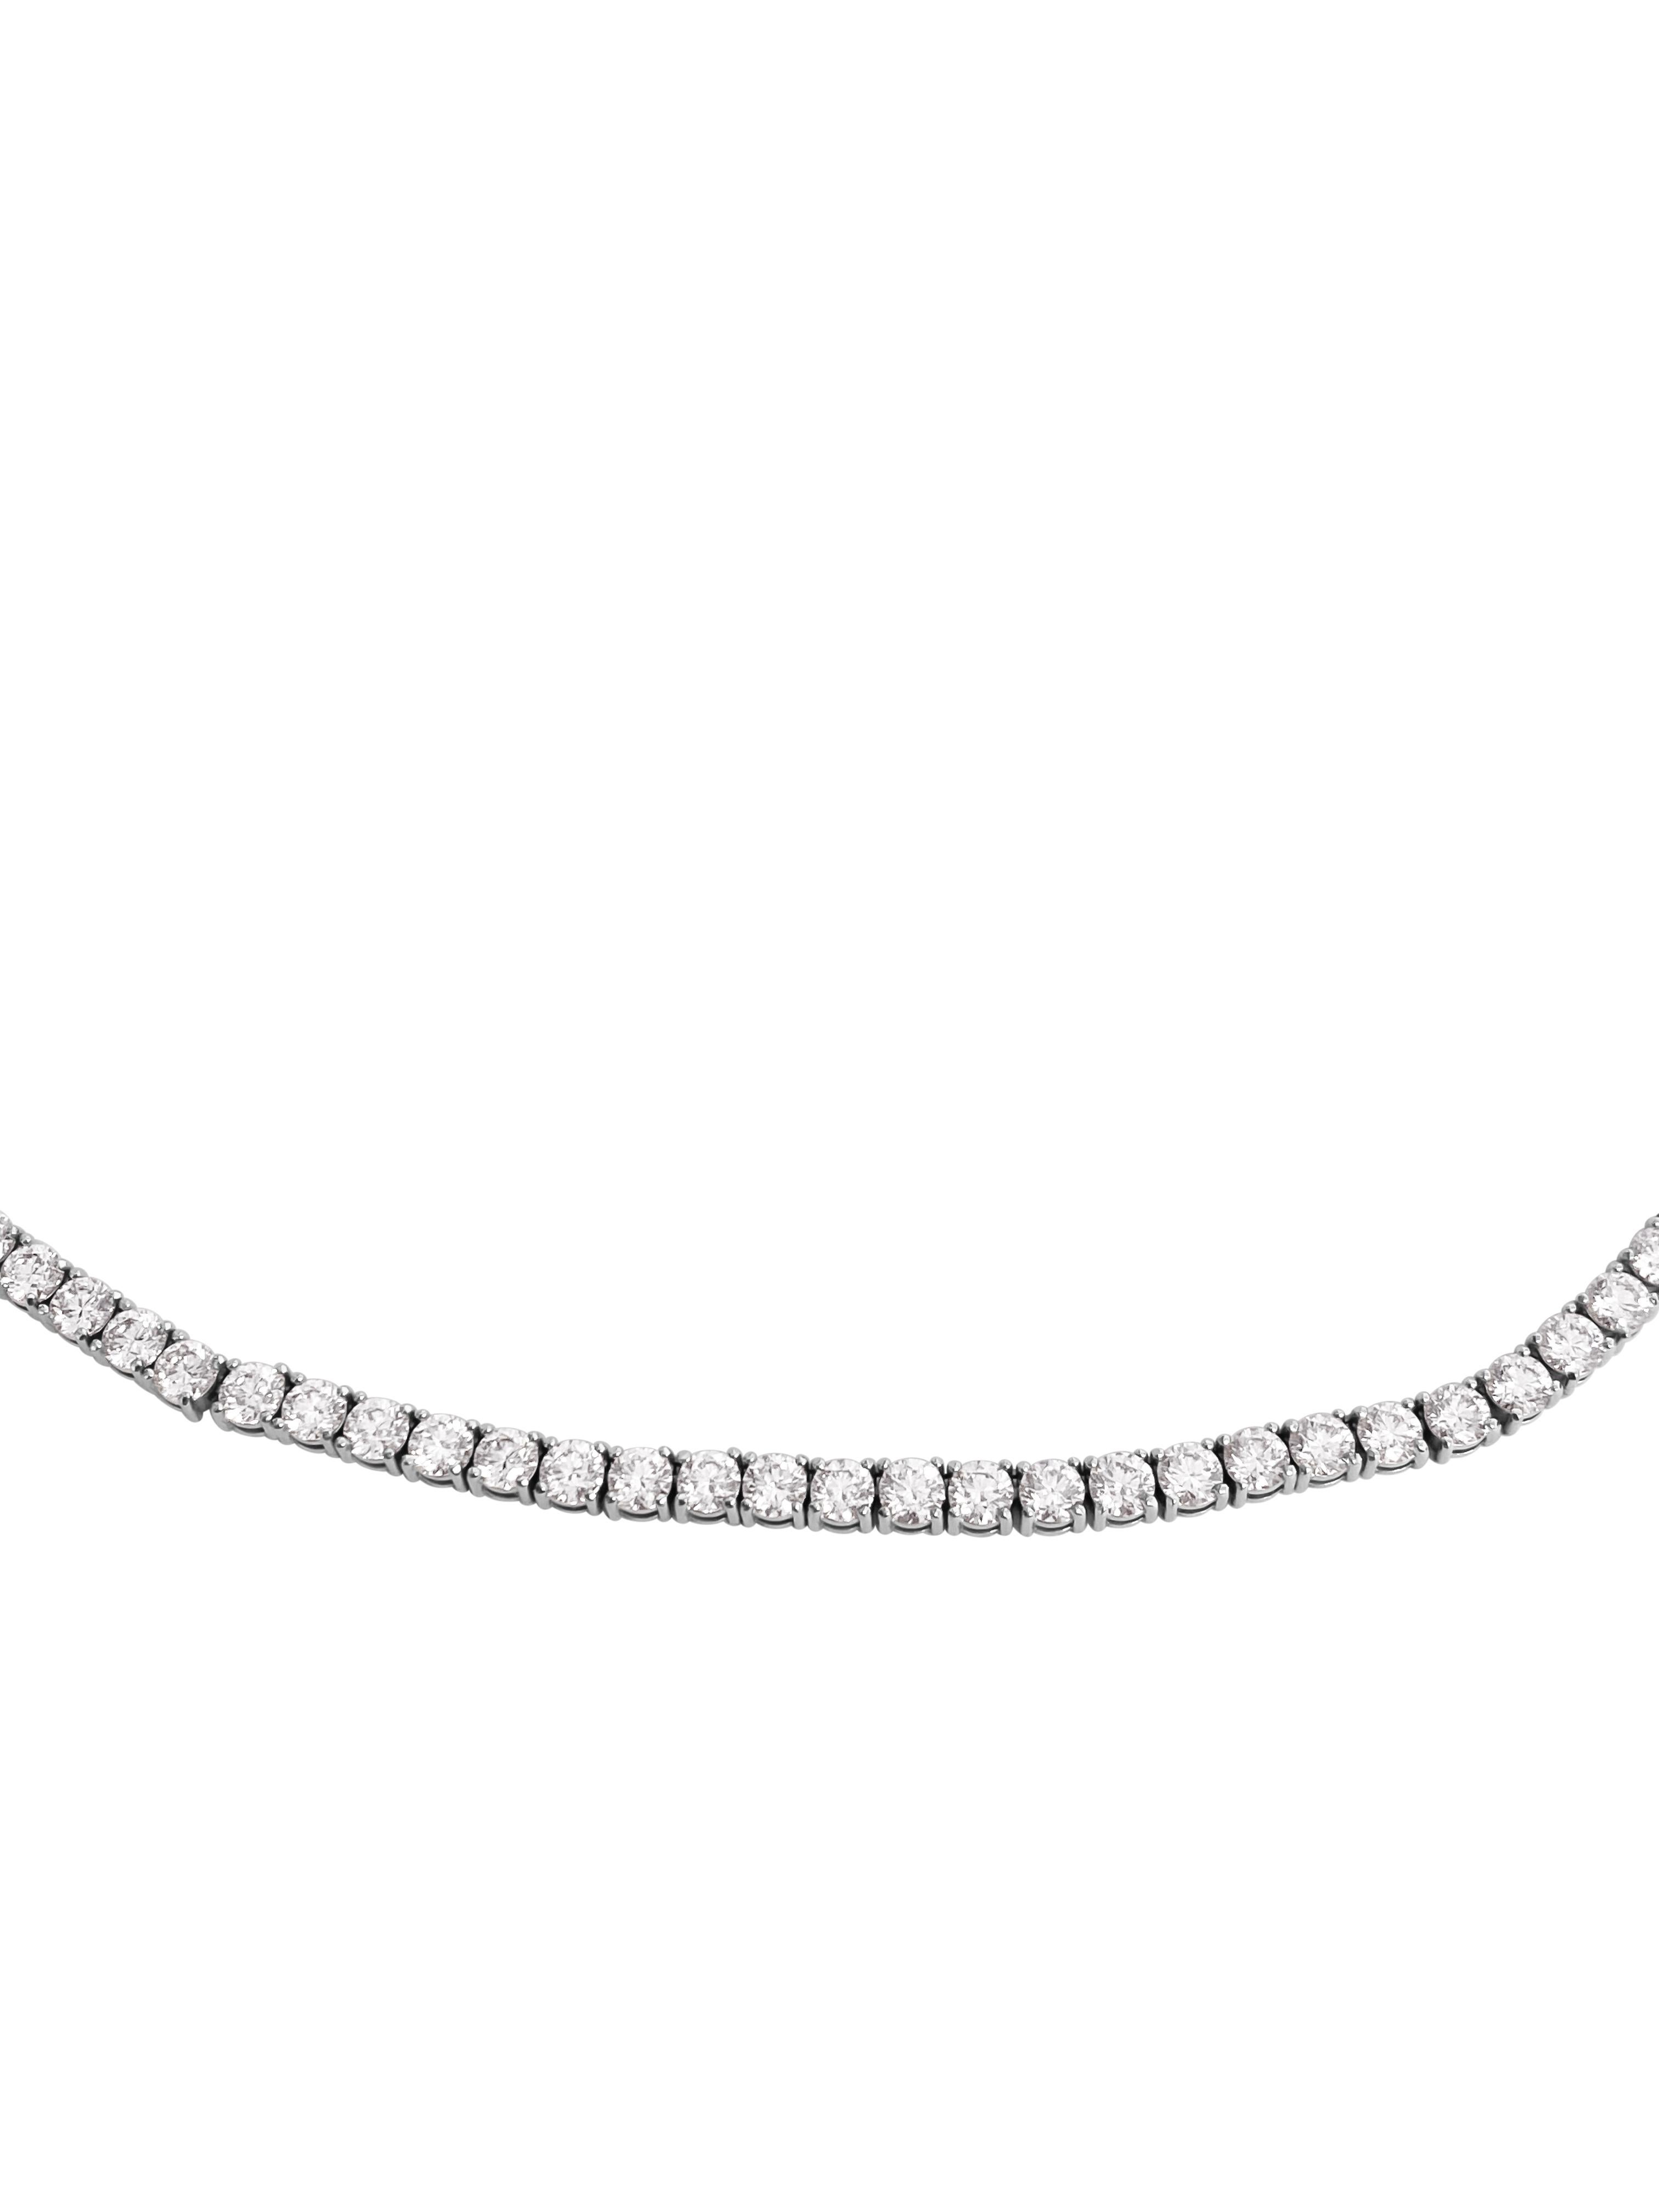 Modern Unisex 28.50 Carat VVS Diamond Tennis Necklace 14 Karat White Gold